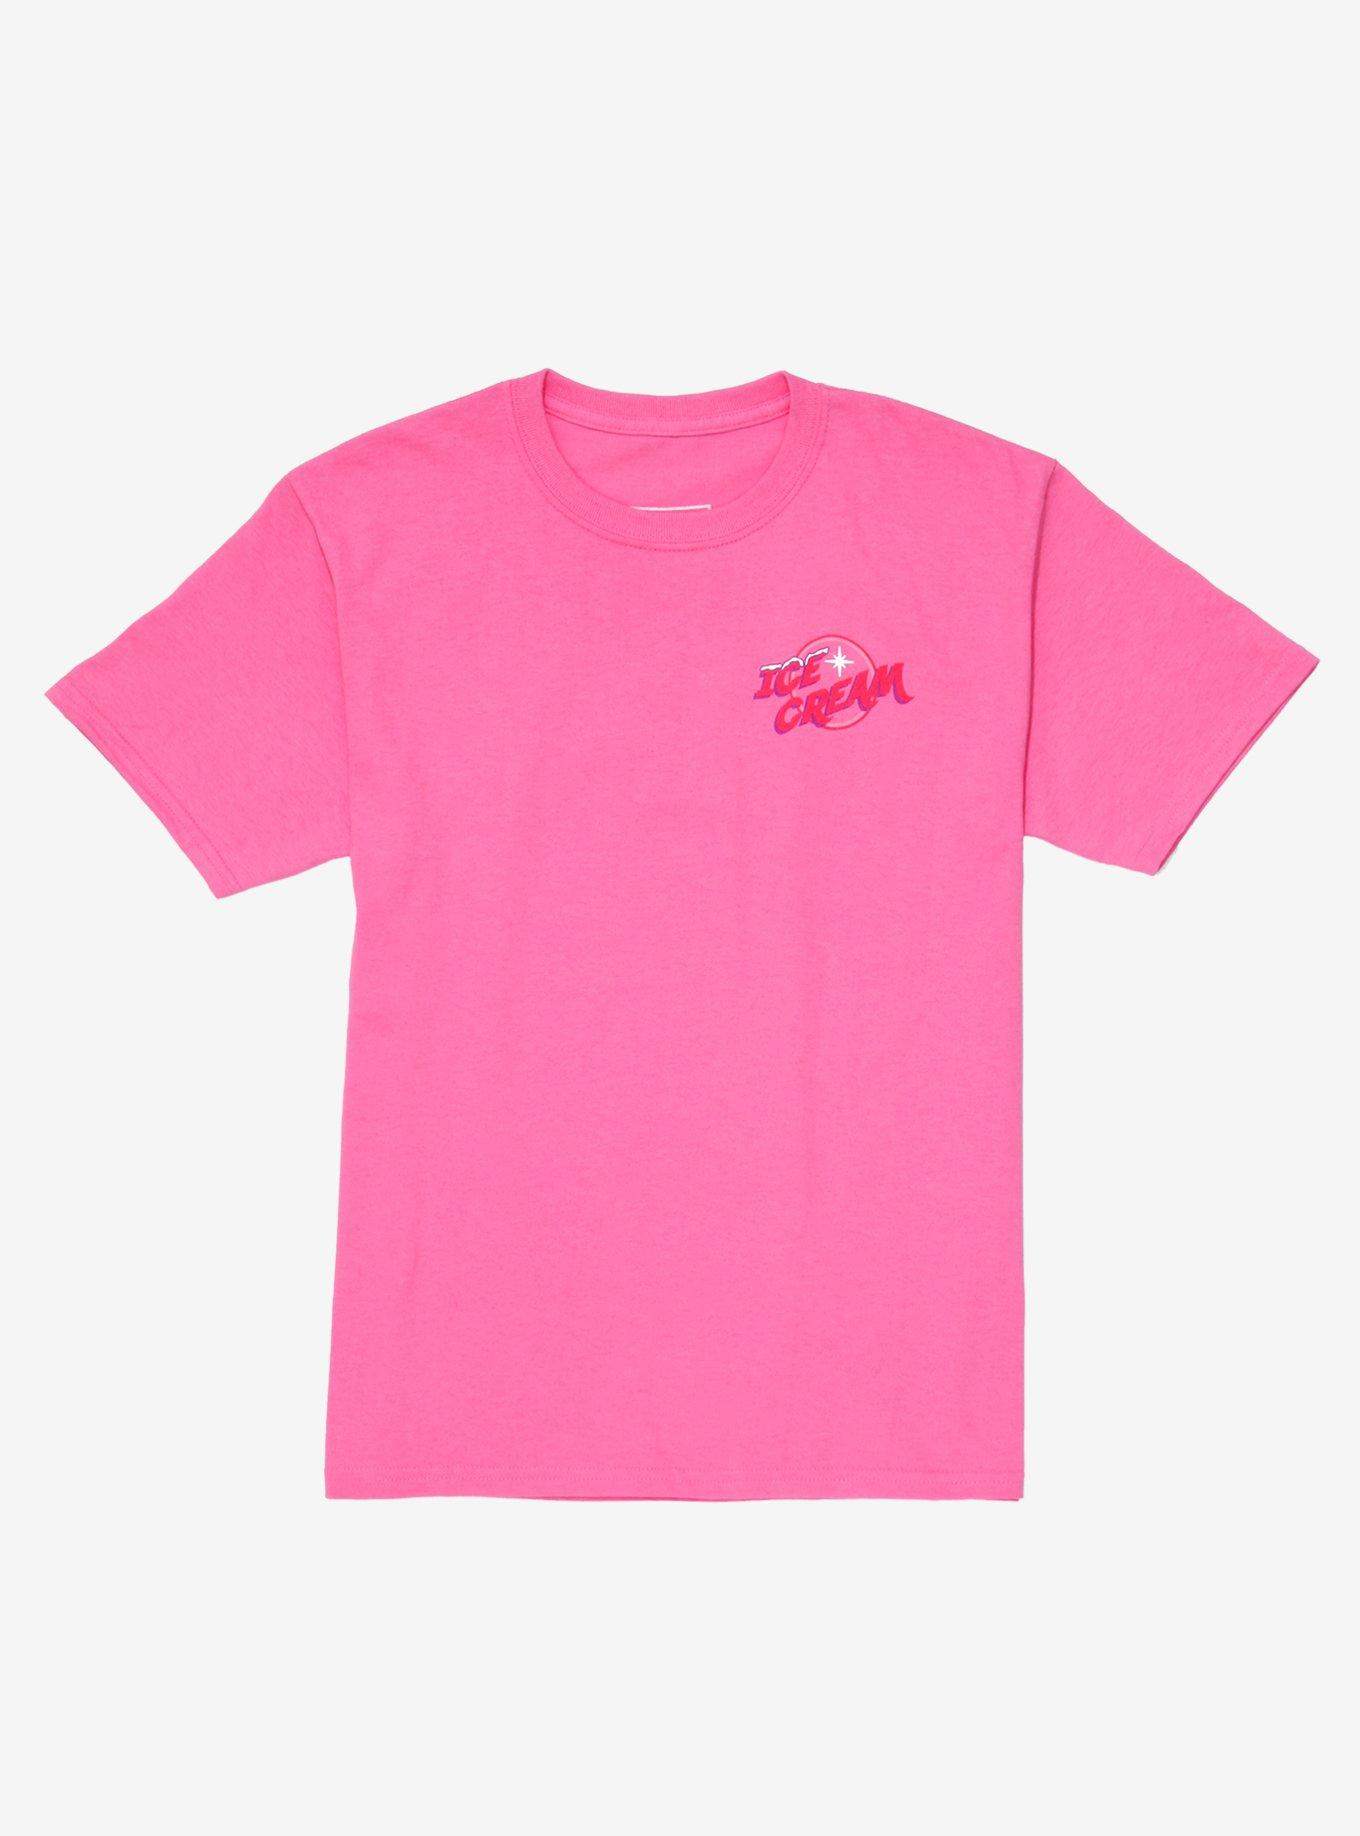 Blackpink Ice Cream Girls T-Shirt, PINK, hi-res